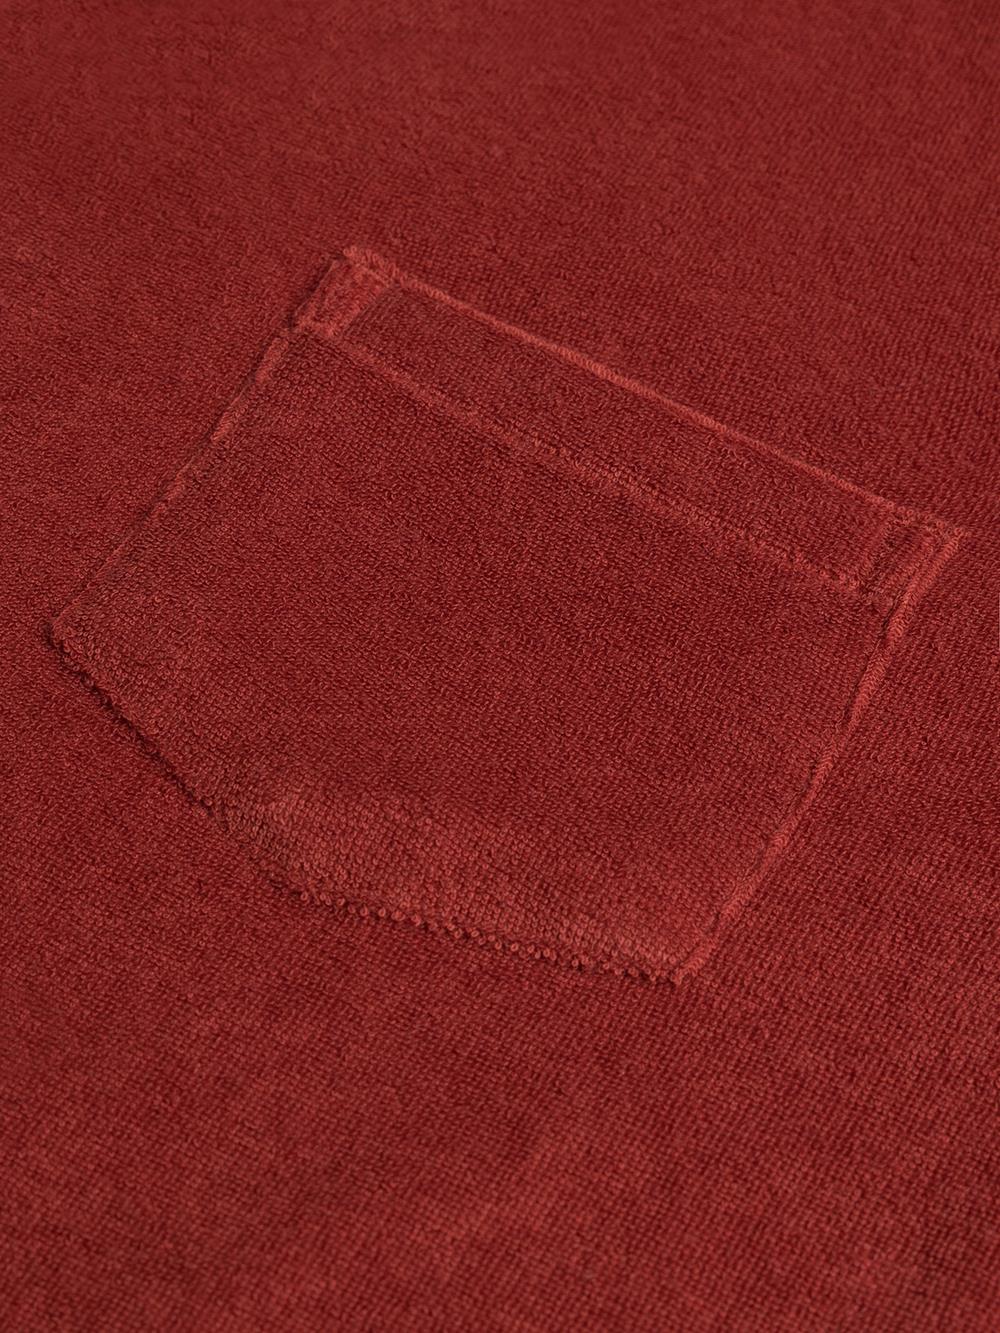 Camicia in spugna rossa - Maniche corte